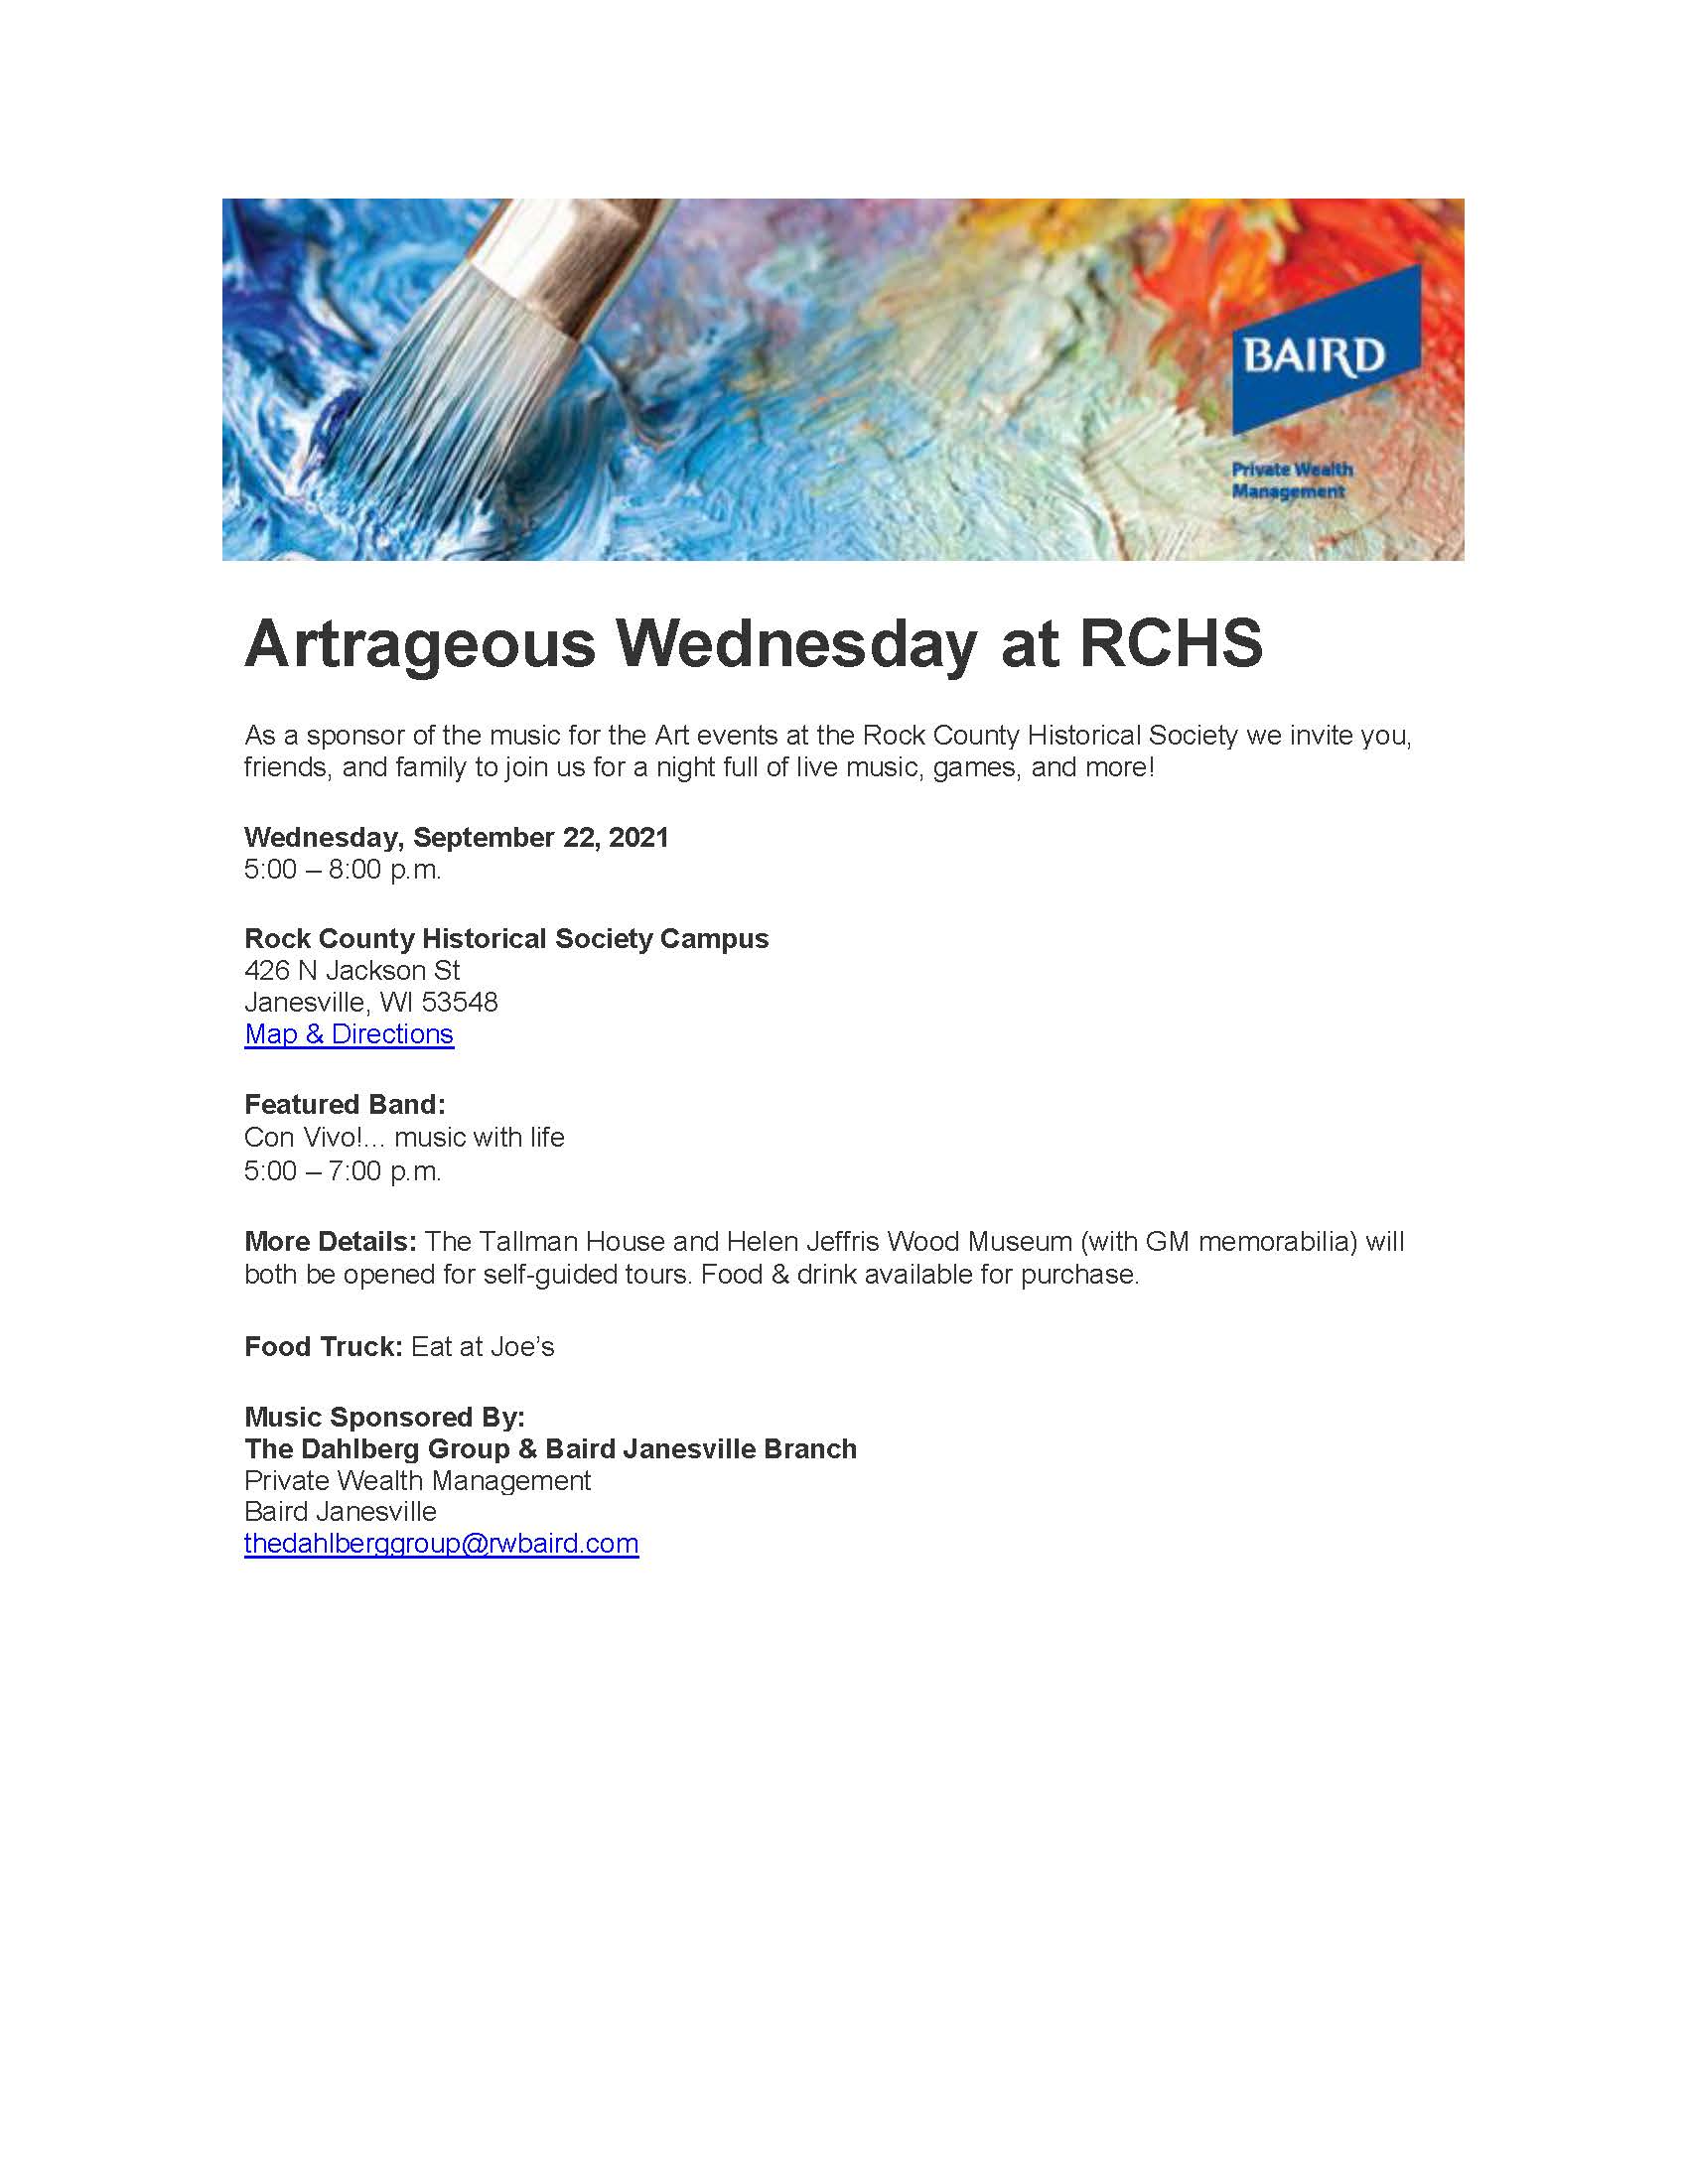 Artrageous Wednesday at RCHS.jpg